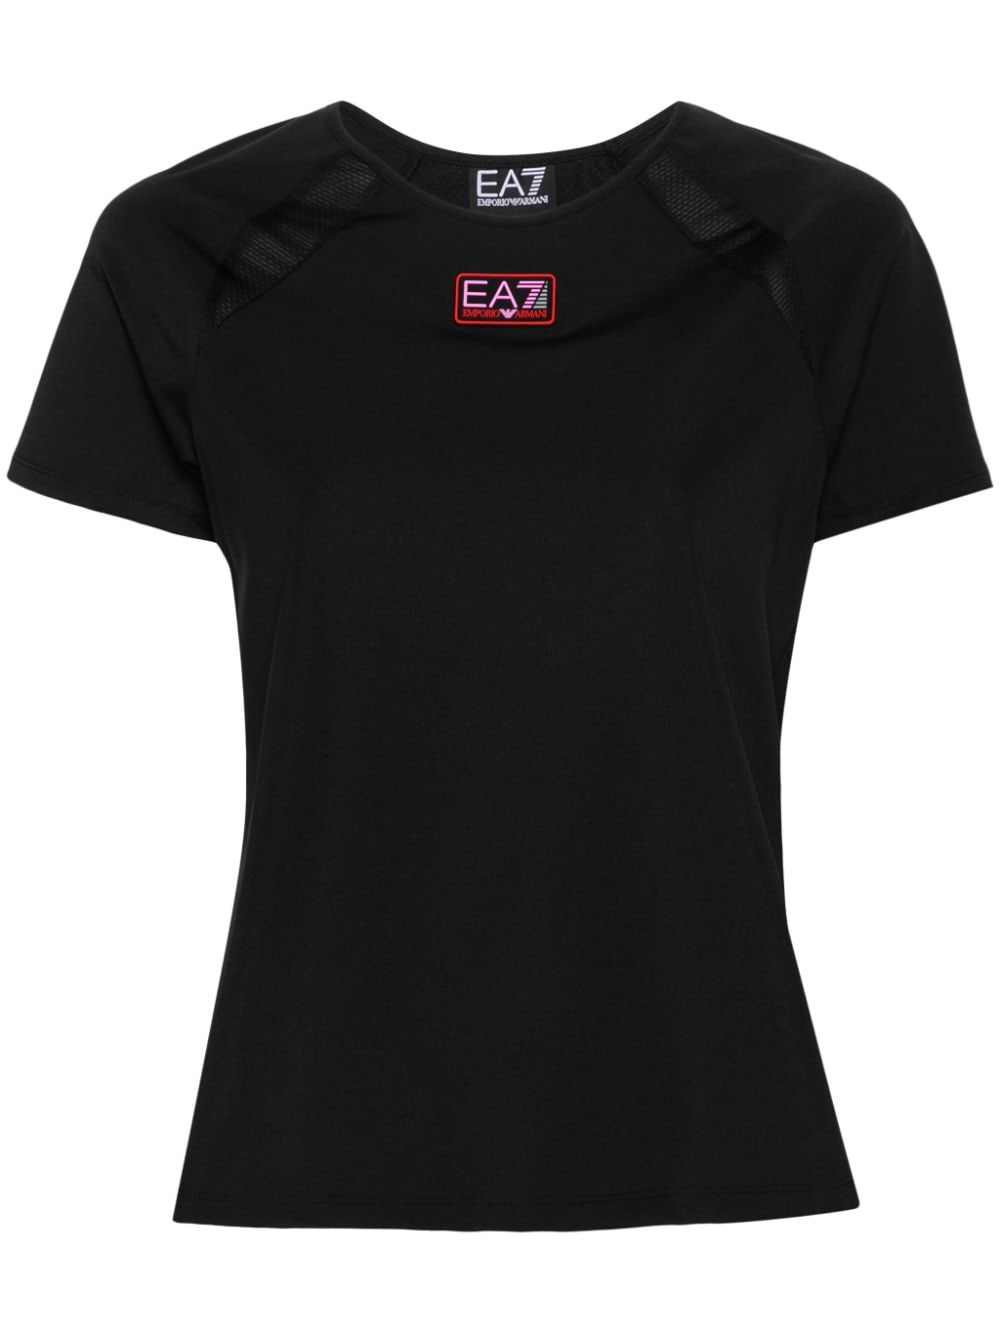 Ea7 Emporio Armani Dynamic Athlete logo-patch T-shirt - Black von Ea7 Emporio Armani